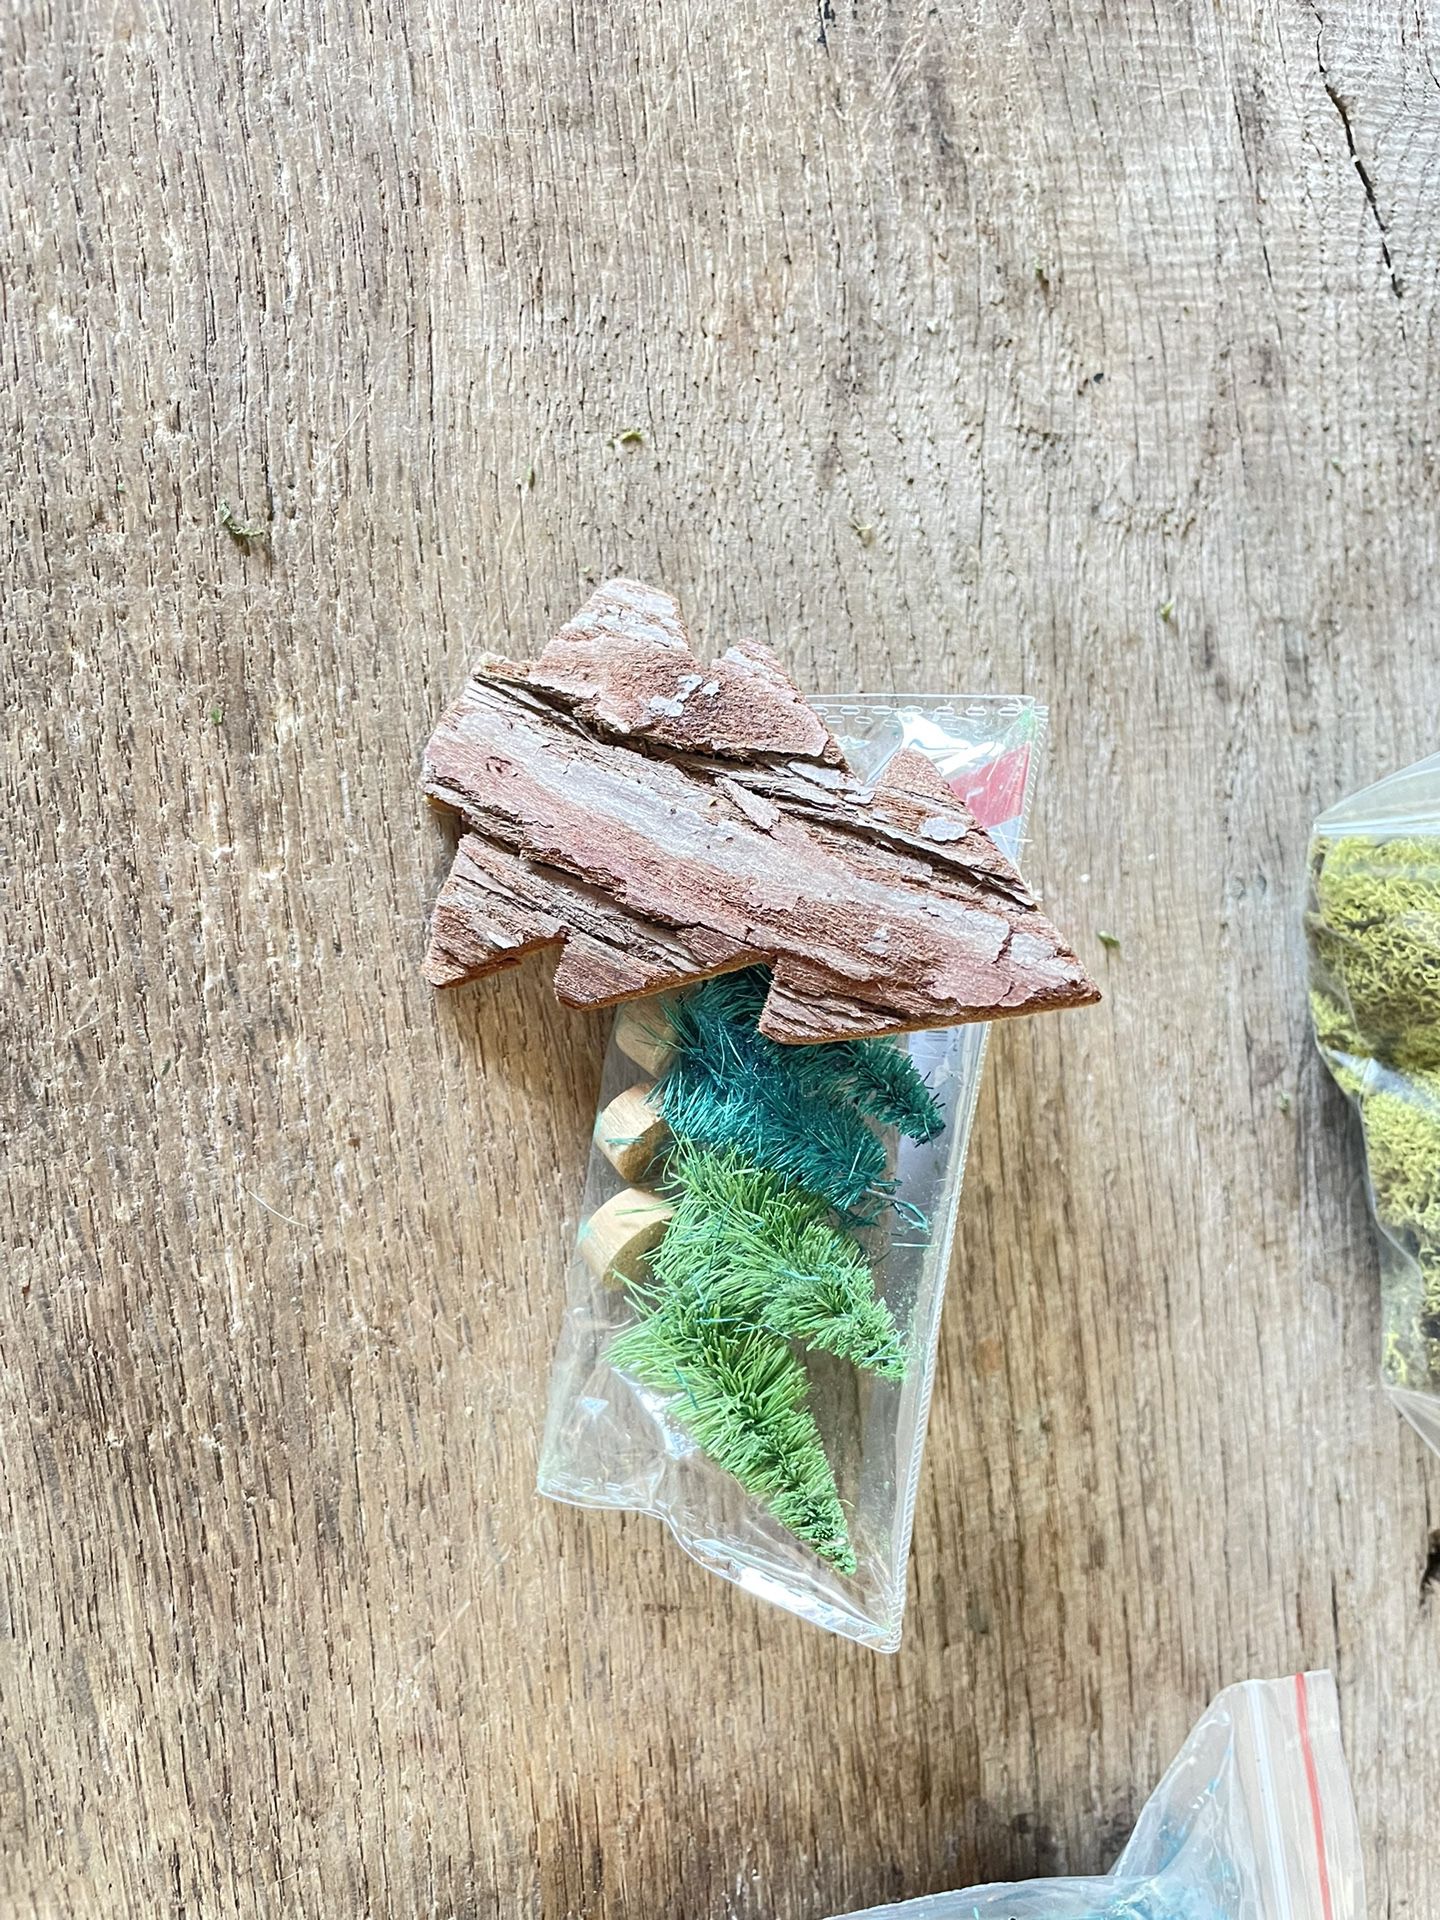 Craft Supplies- Moss, Dried Flowers, Bark, Mini Christmas Trees